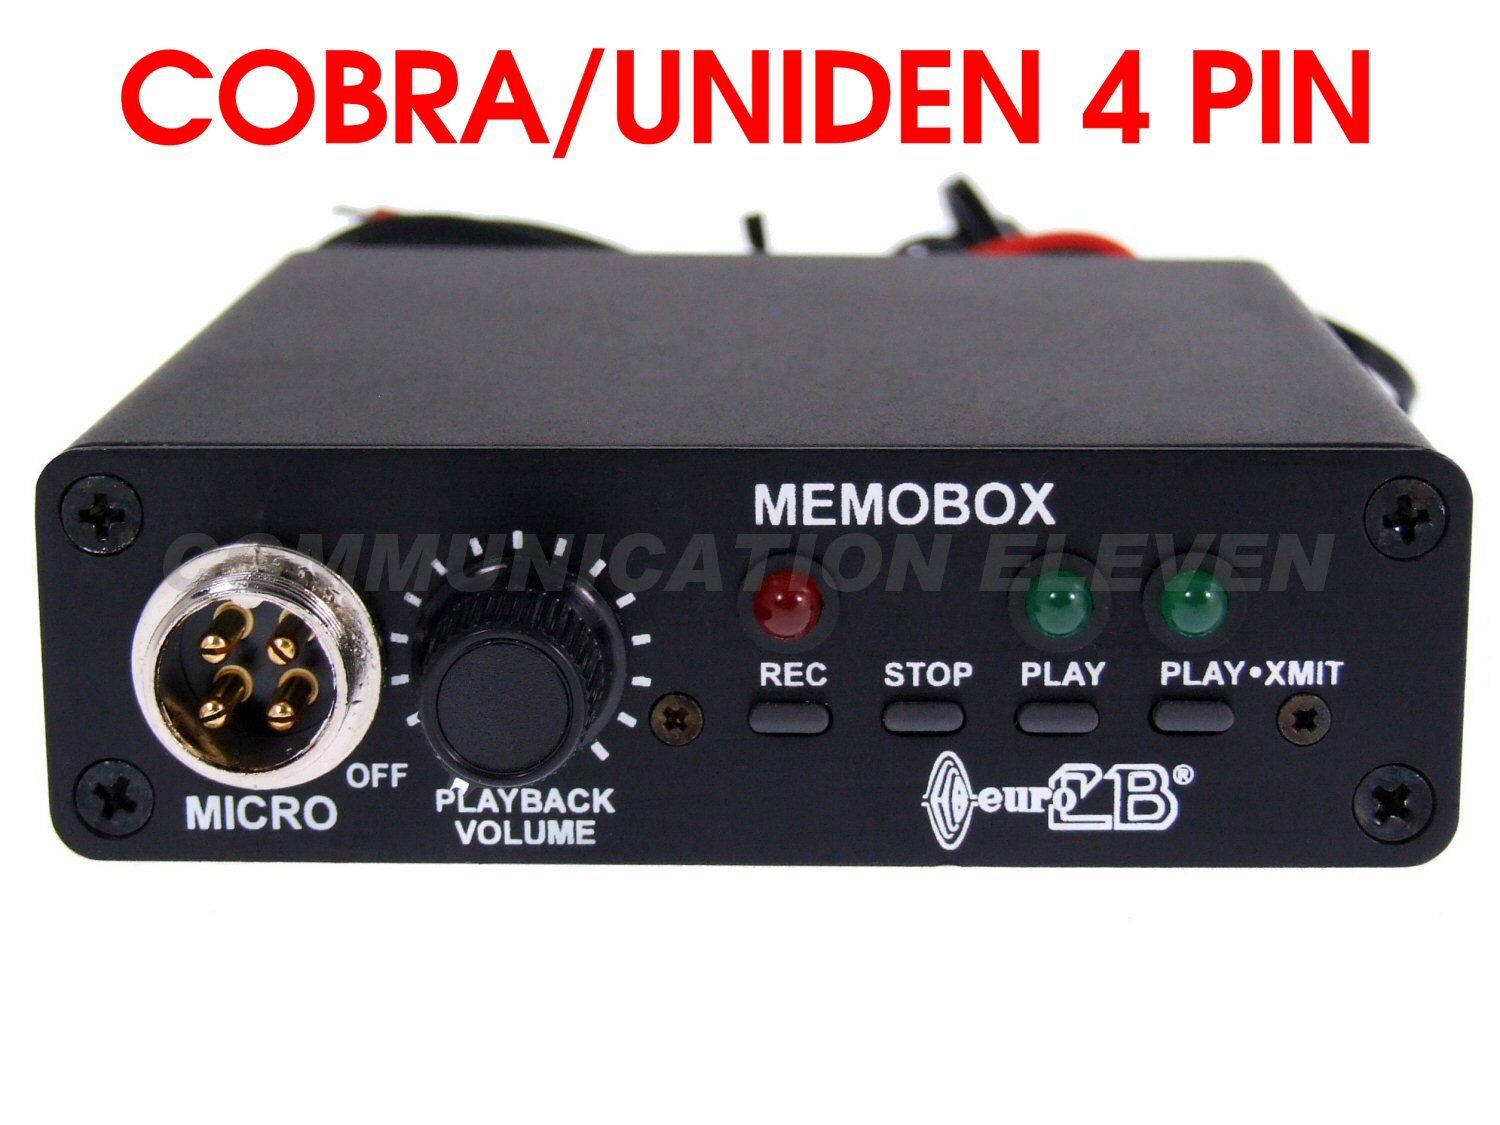 Euro CB Memobox Digital Recorder/Transmitter/Watergate - Cobra/Galaxy/Uniden CBs